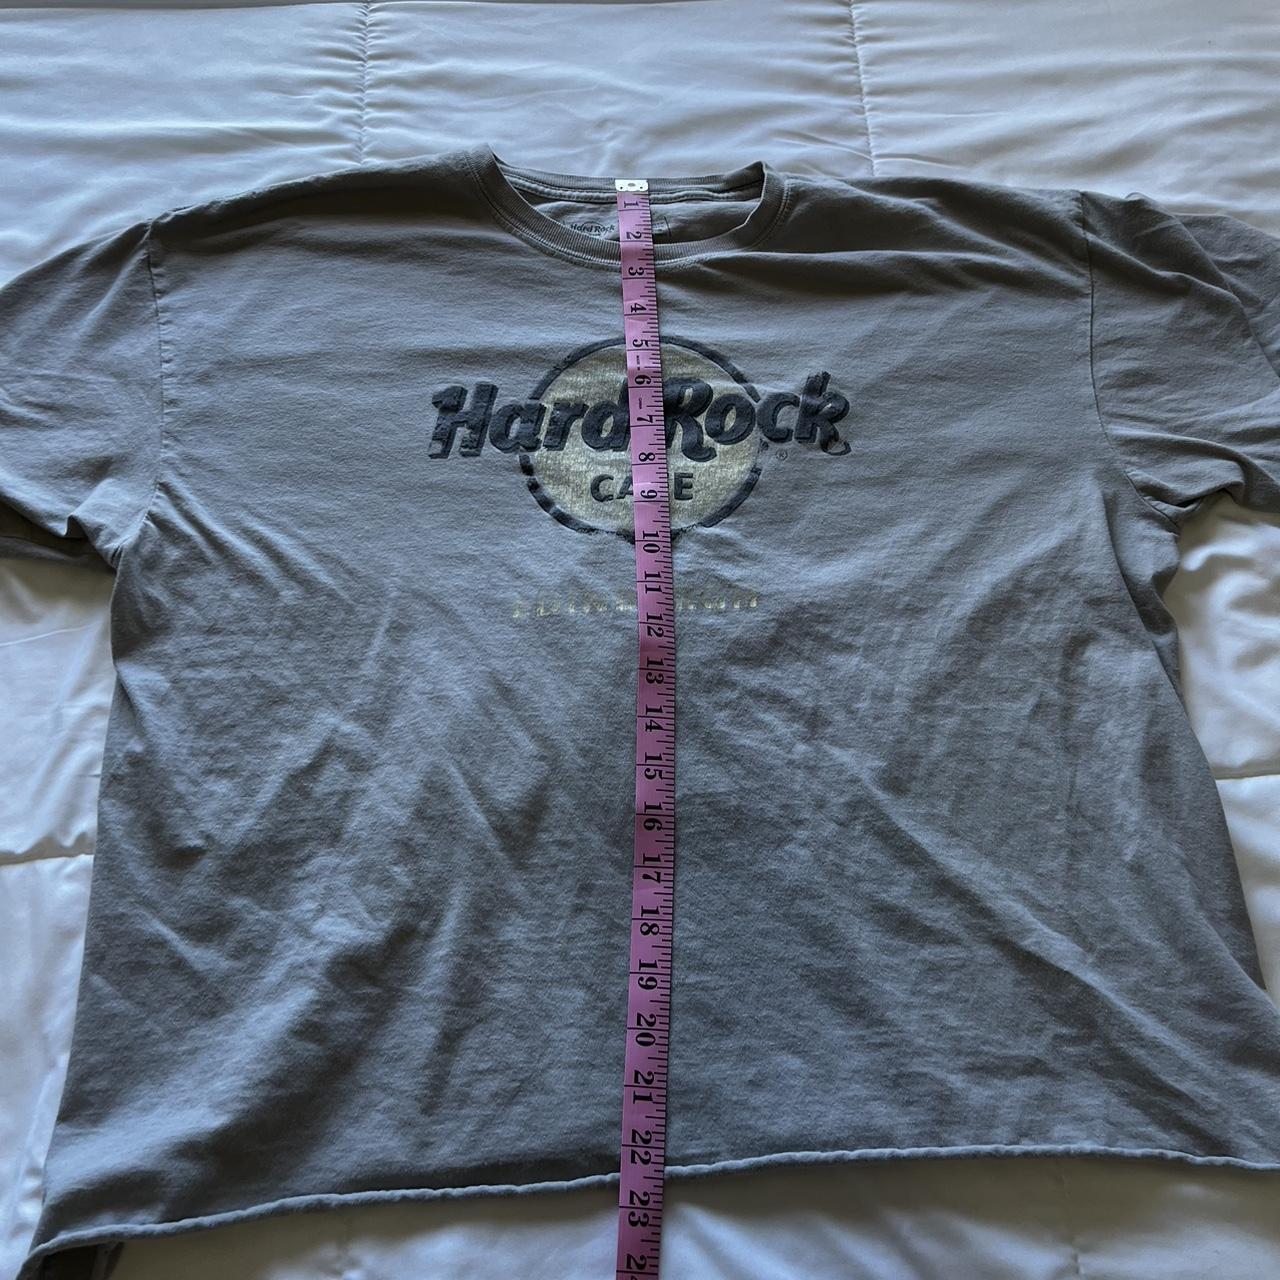 Hard Rock Cafe Women's Grey and Cream T-shirt (2)